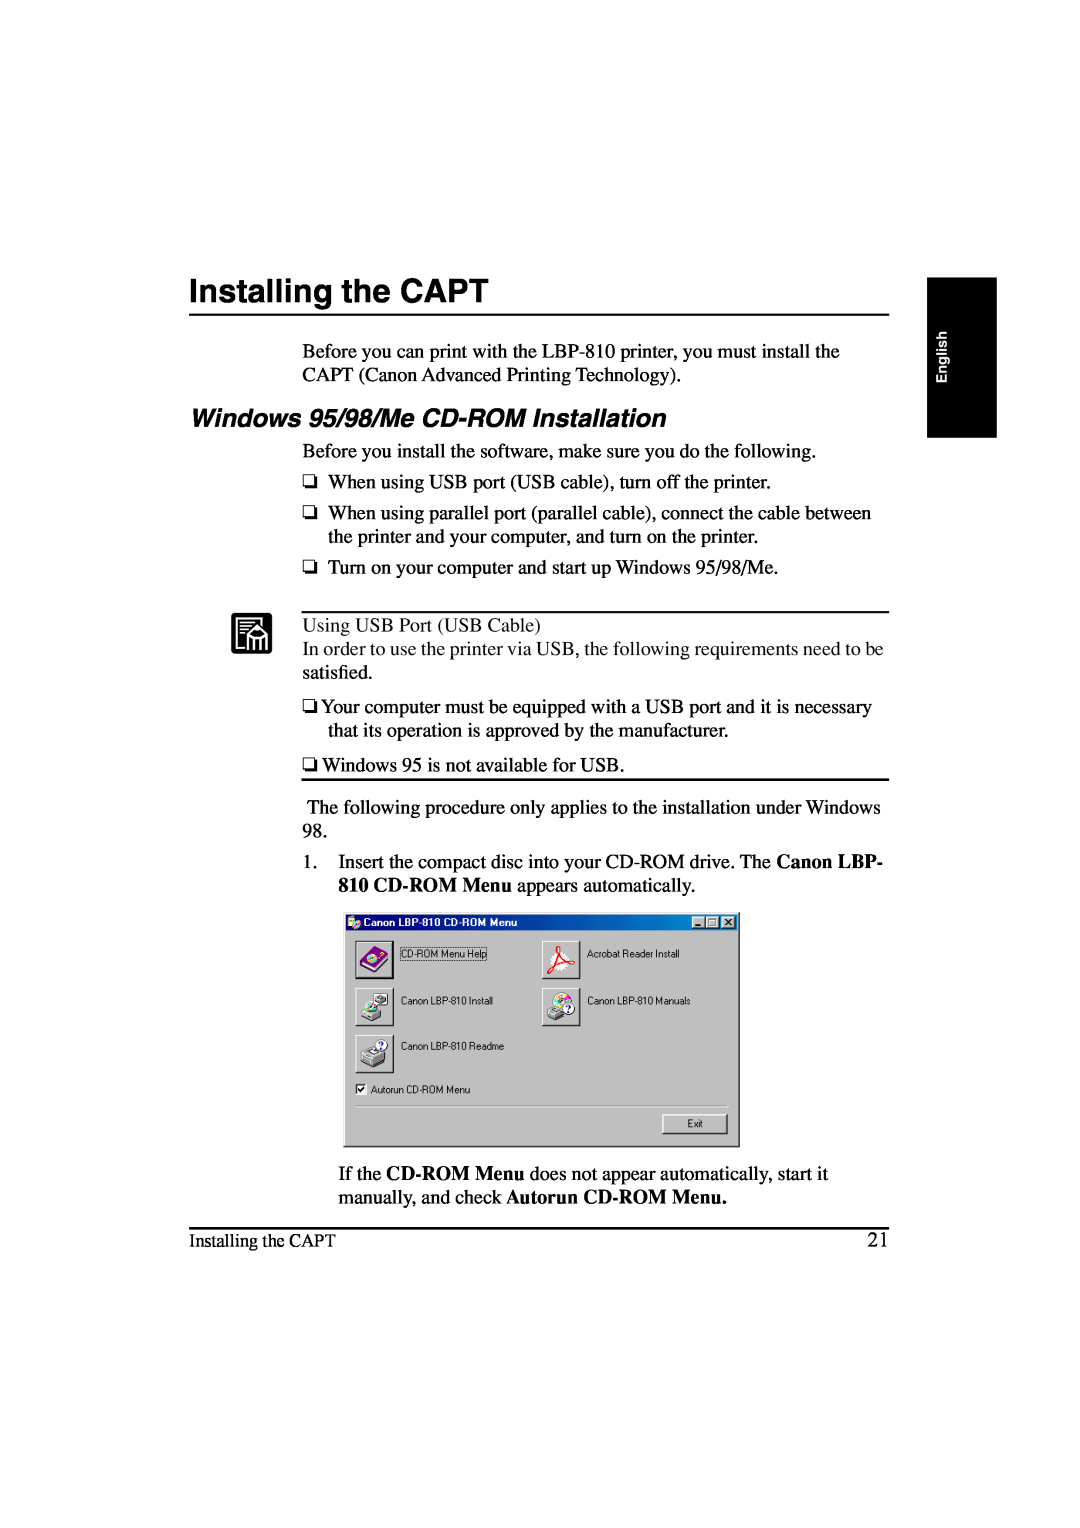 Canon LBP-810 manual Installing the CAPT, Windows 95/98/Me CD-ROMInstallation 